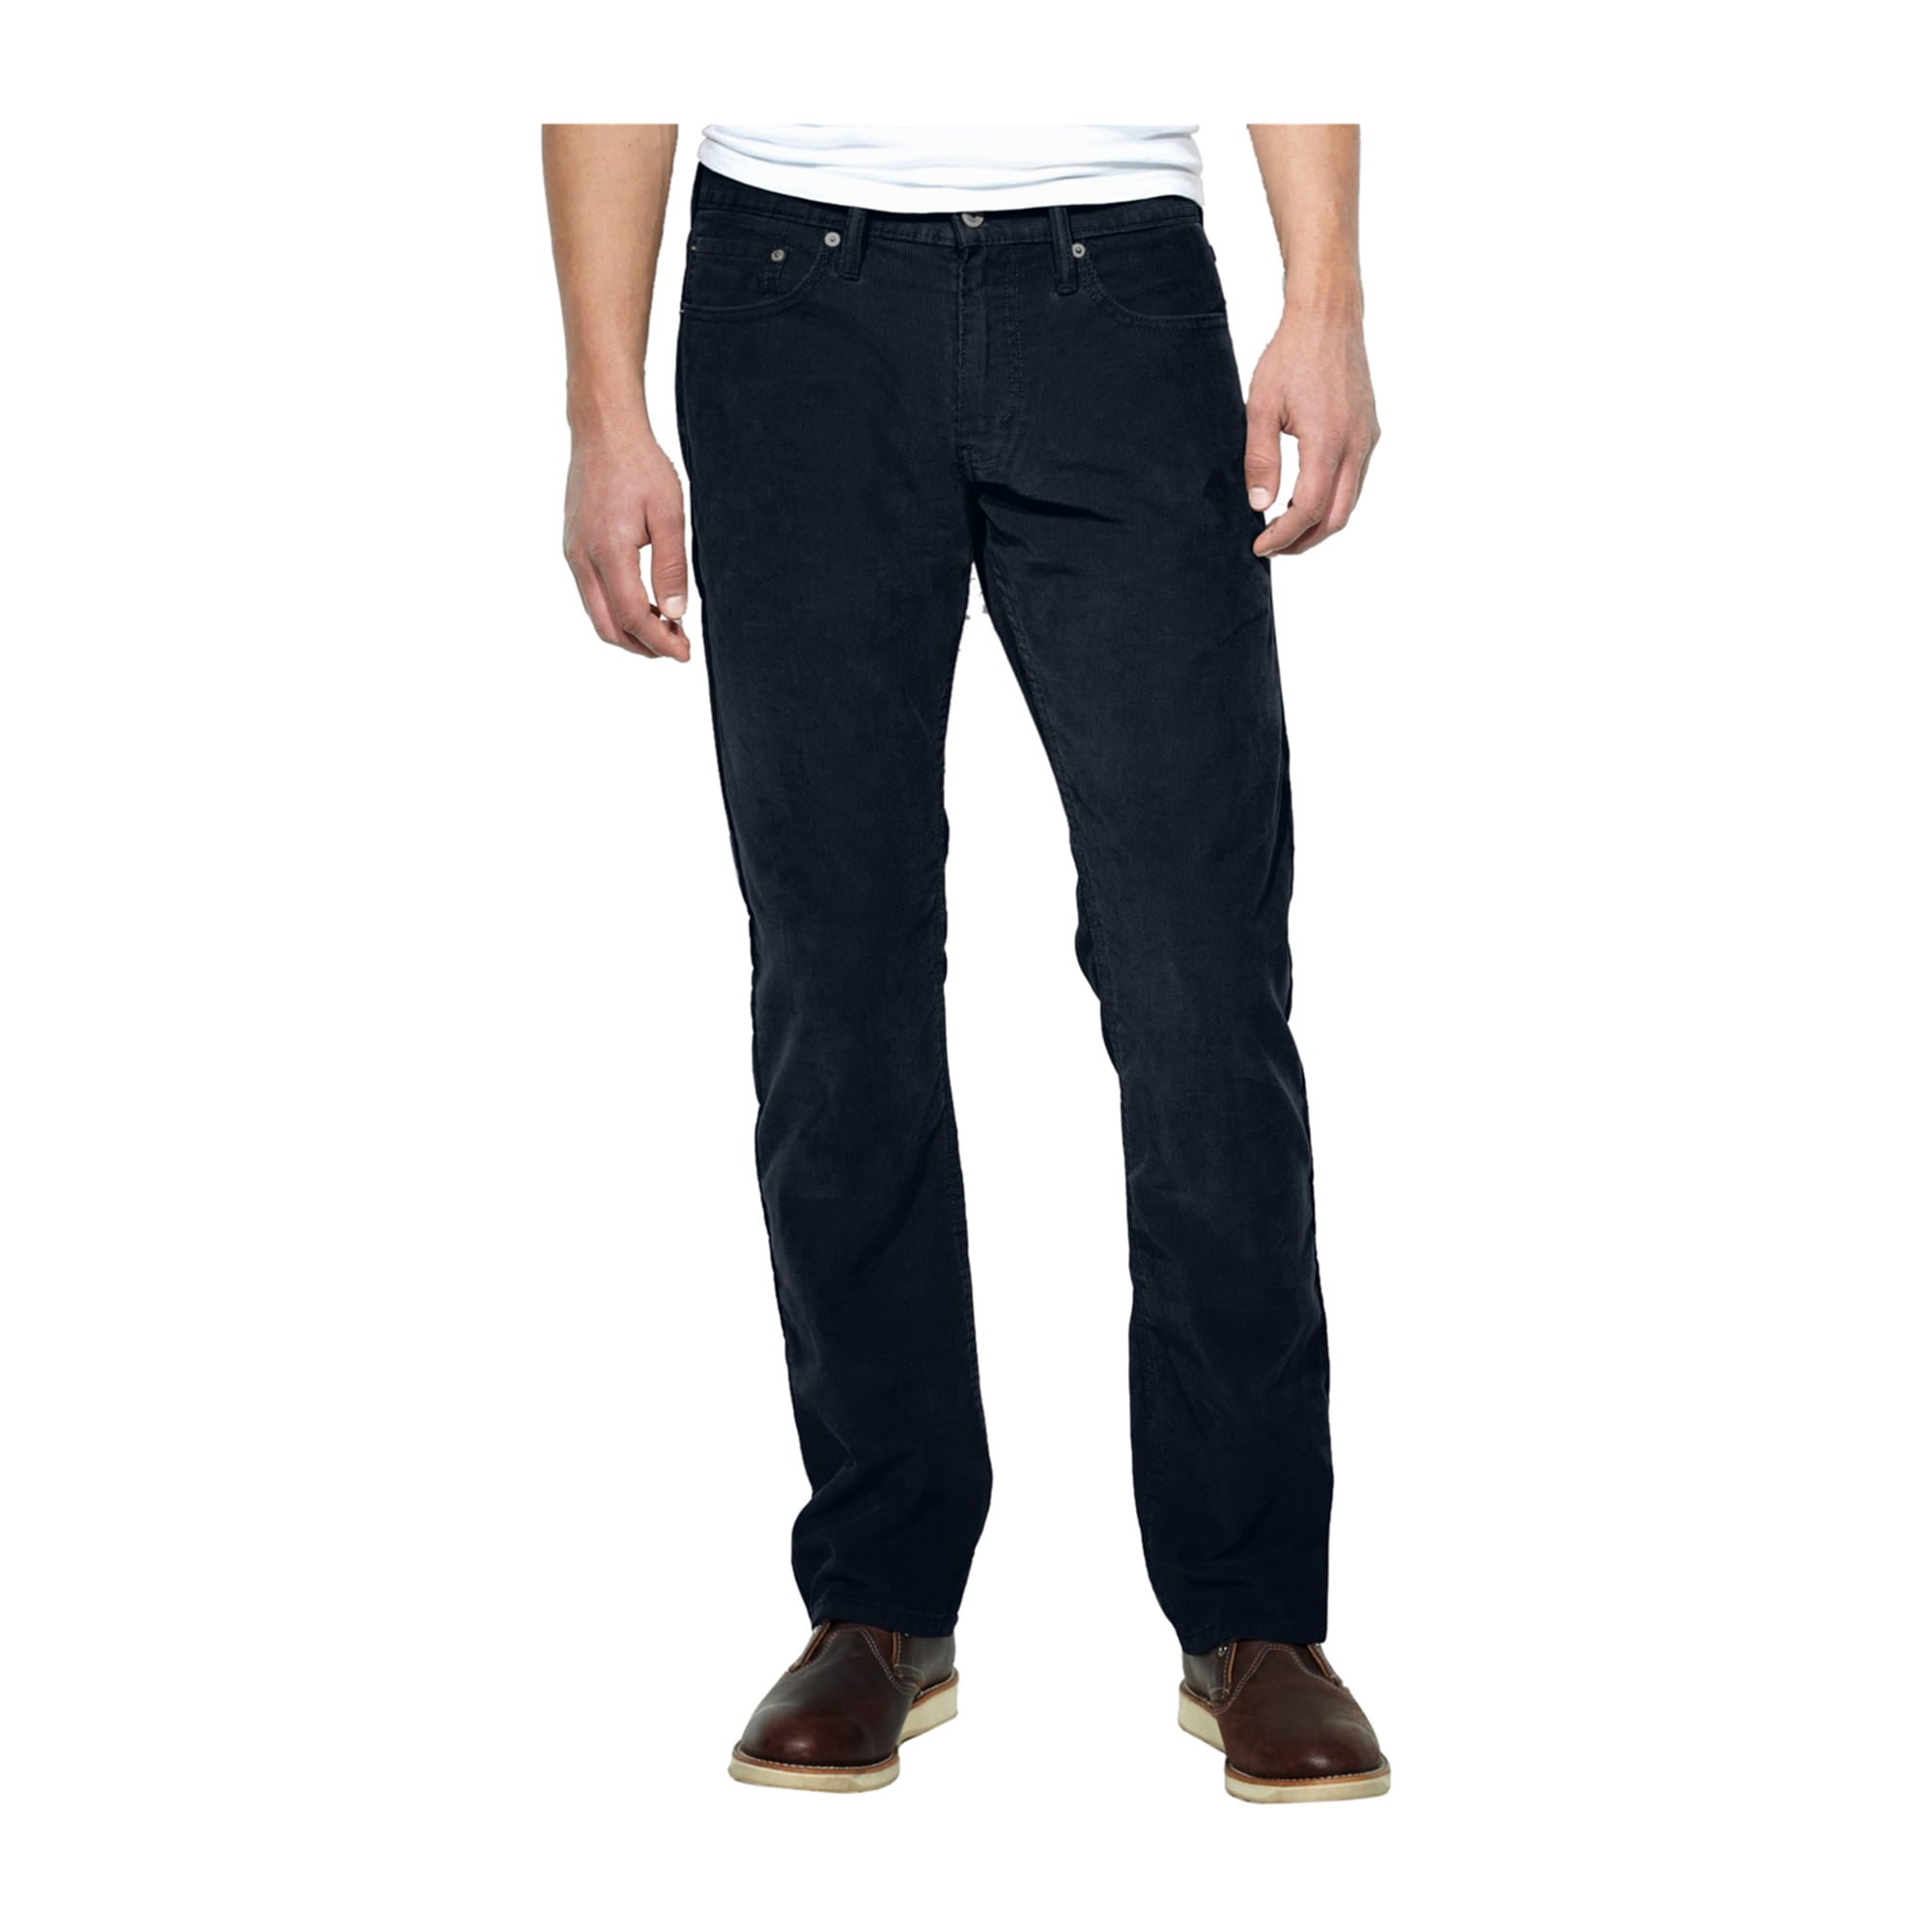 Levi's Mens Bedford Casual Corduroy Pants blue 32x36 | Walmart Canada